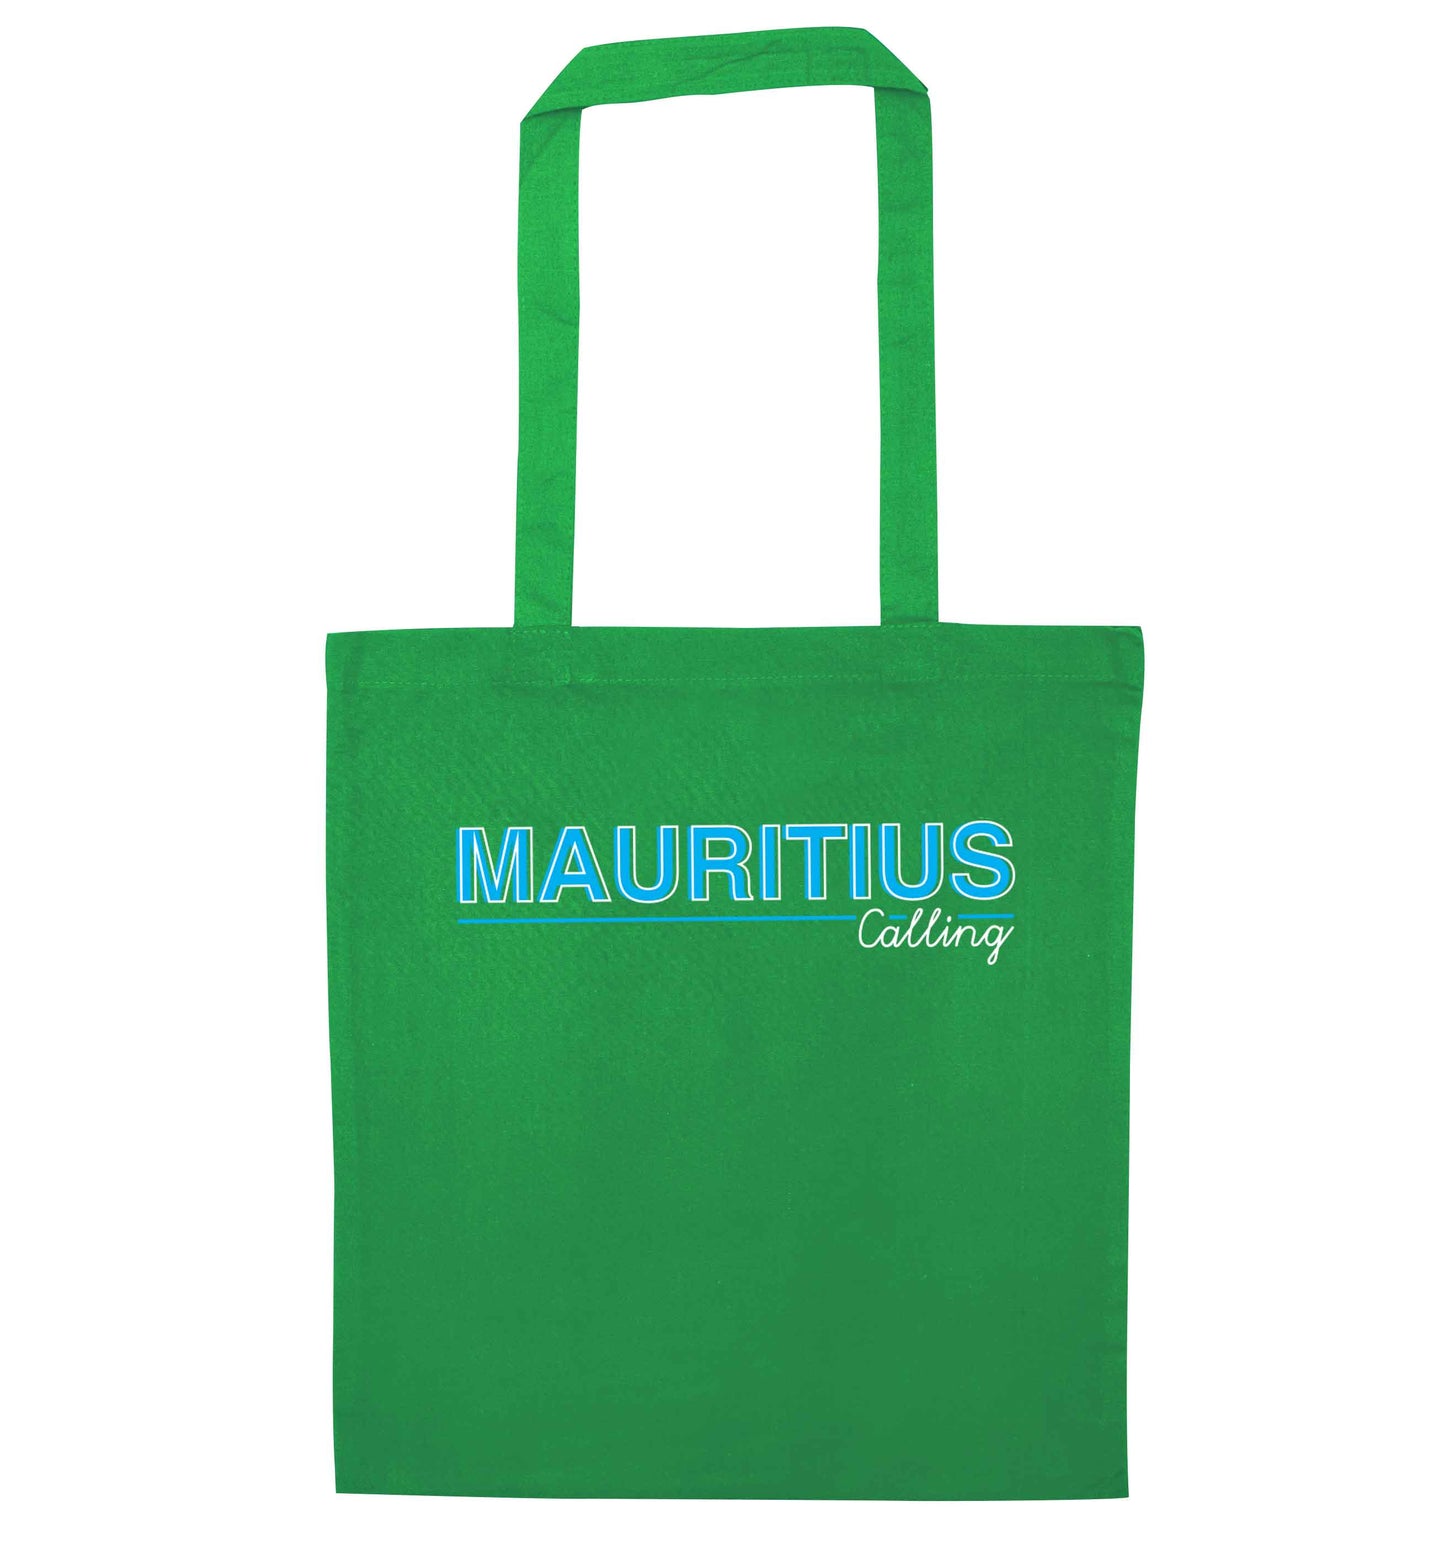 Mauritius calling green tote bag